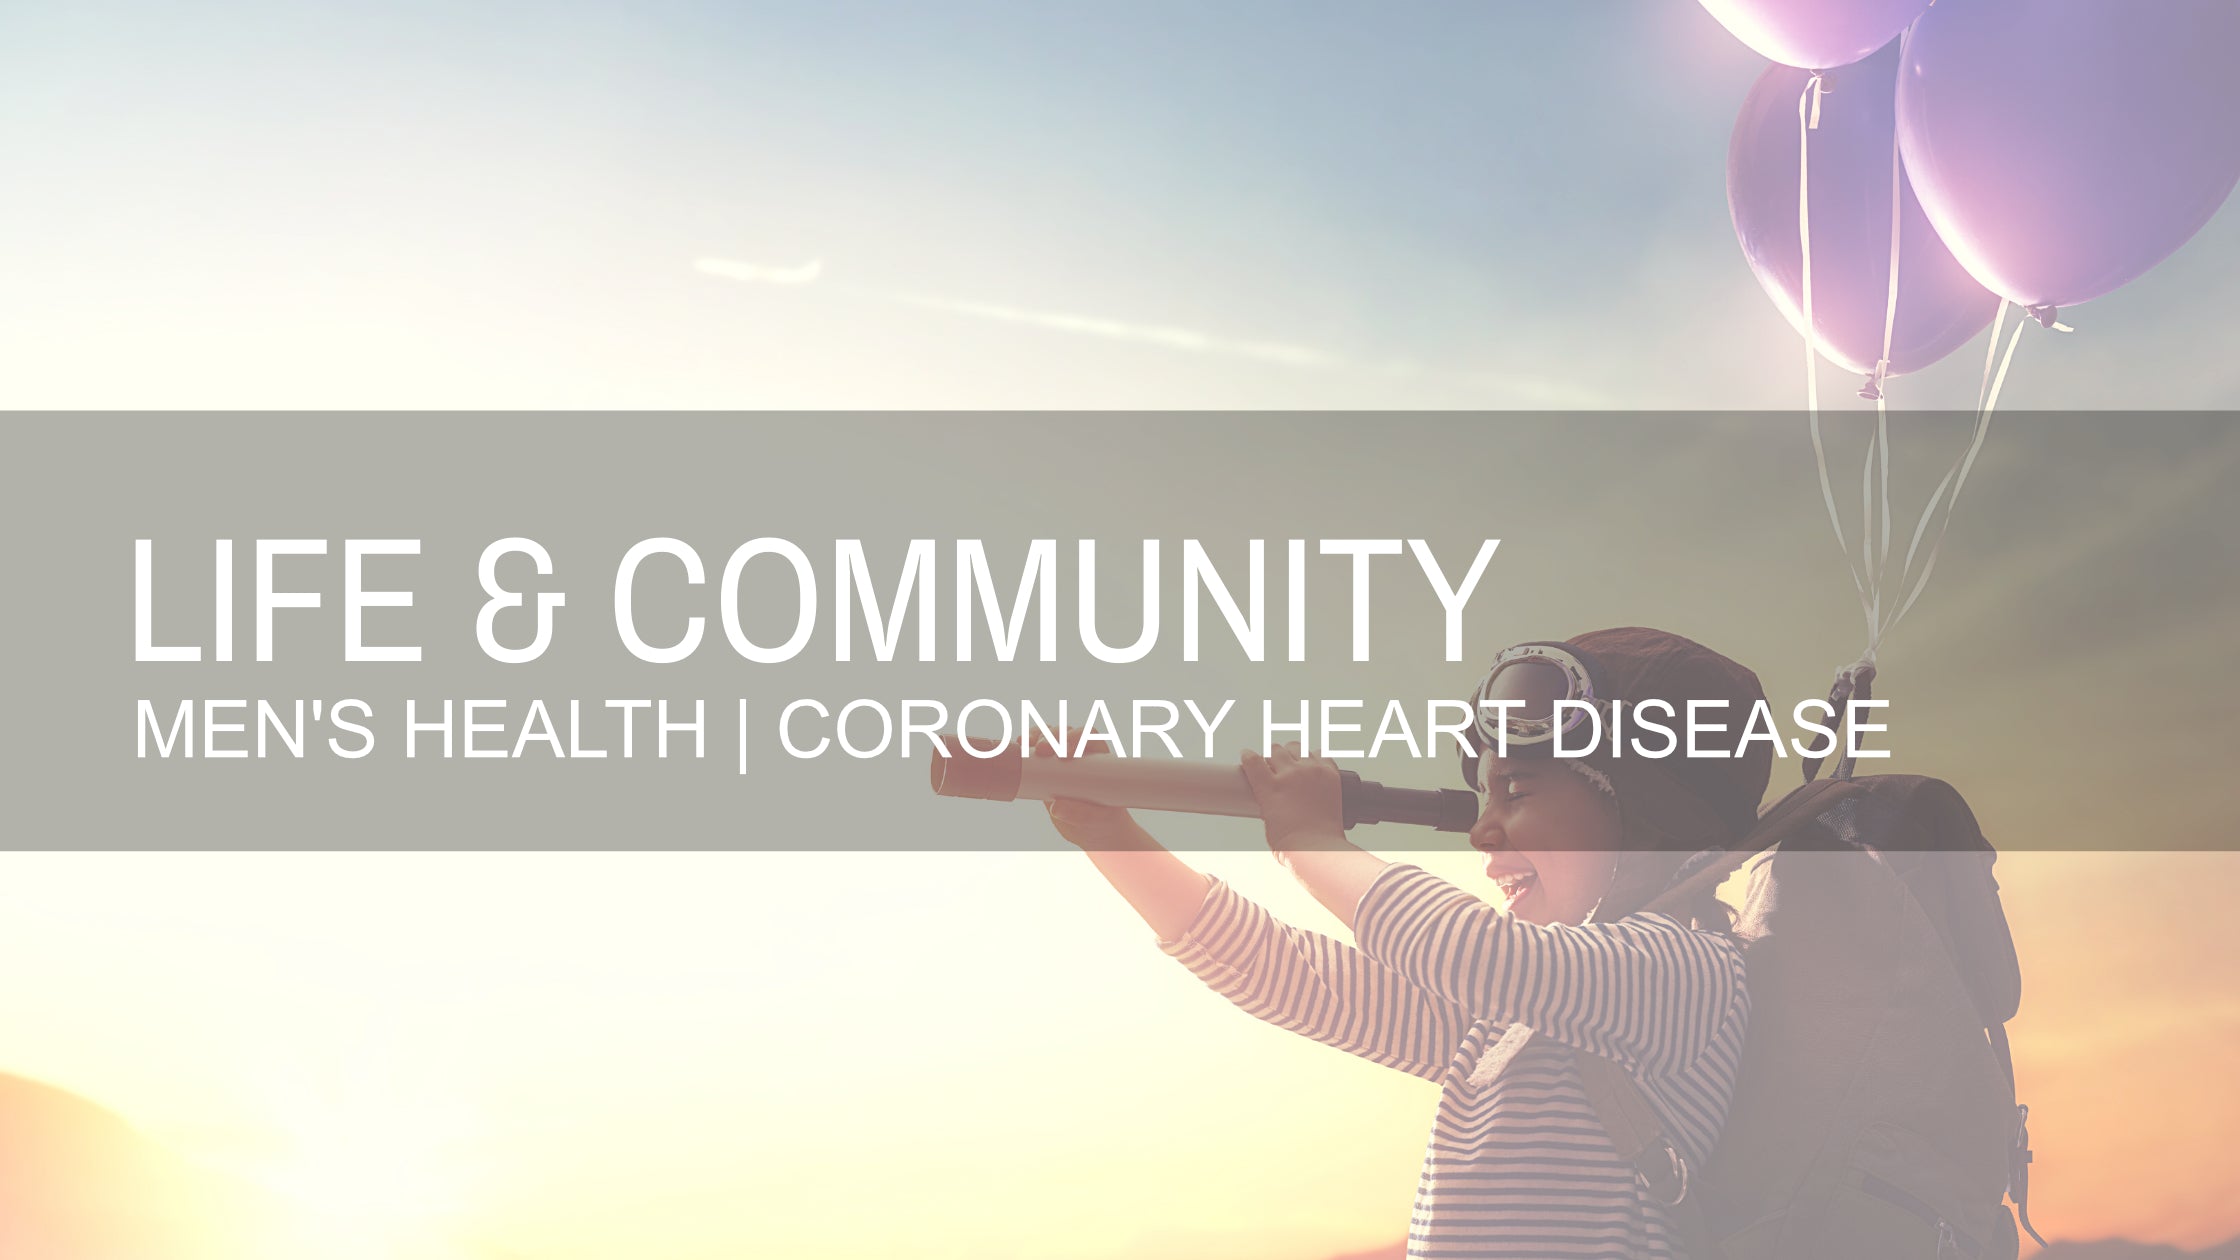 Men's Health | Coronary Heart Disease